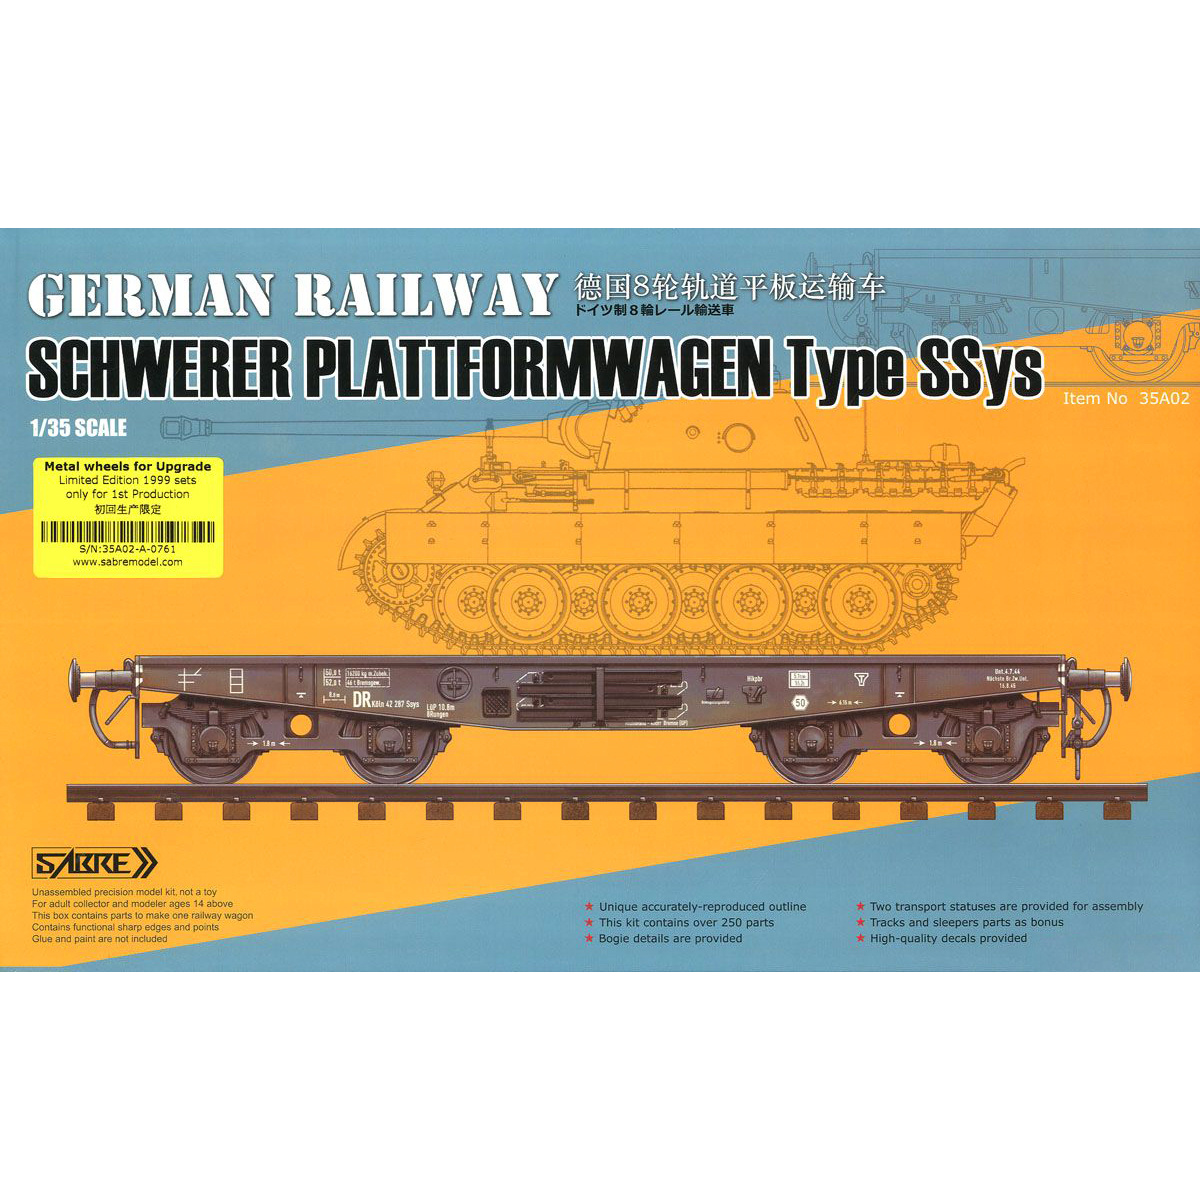 35A02-MW Sabre Model 1/35 Railway Platform type SSys (metal wheels)